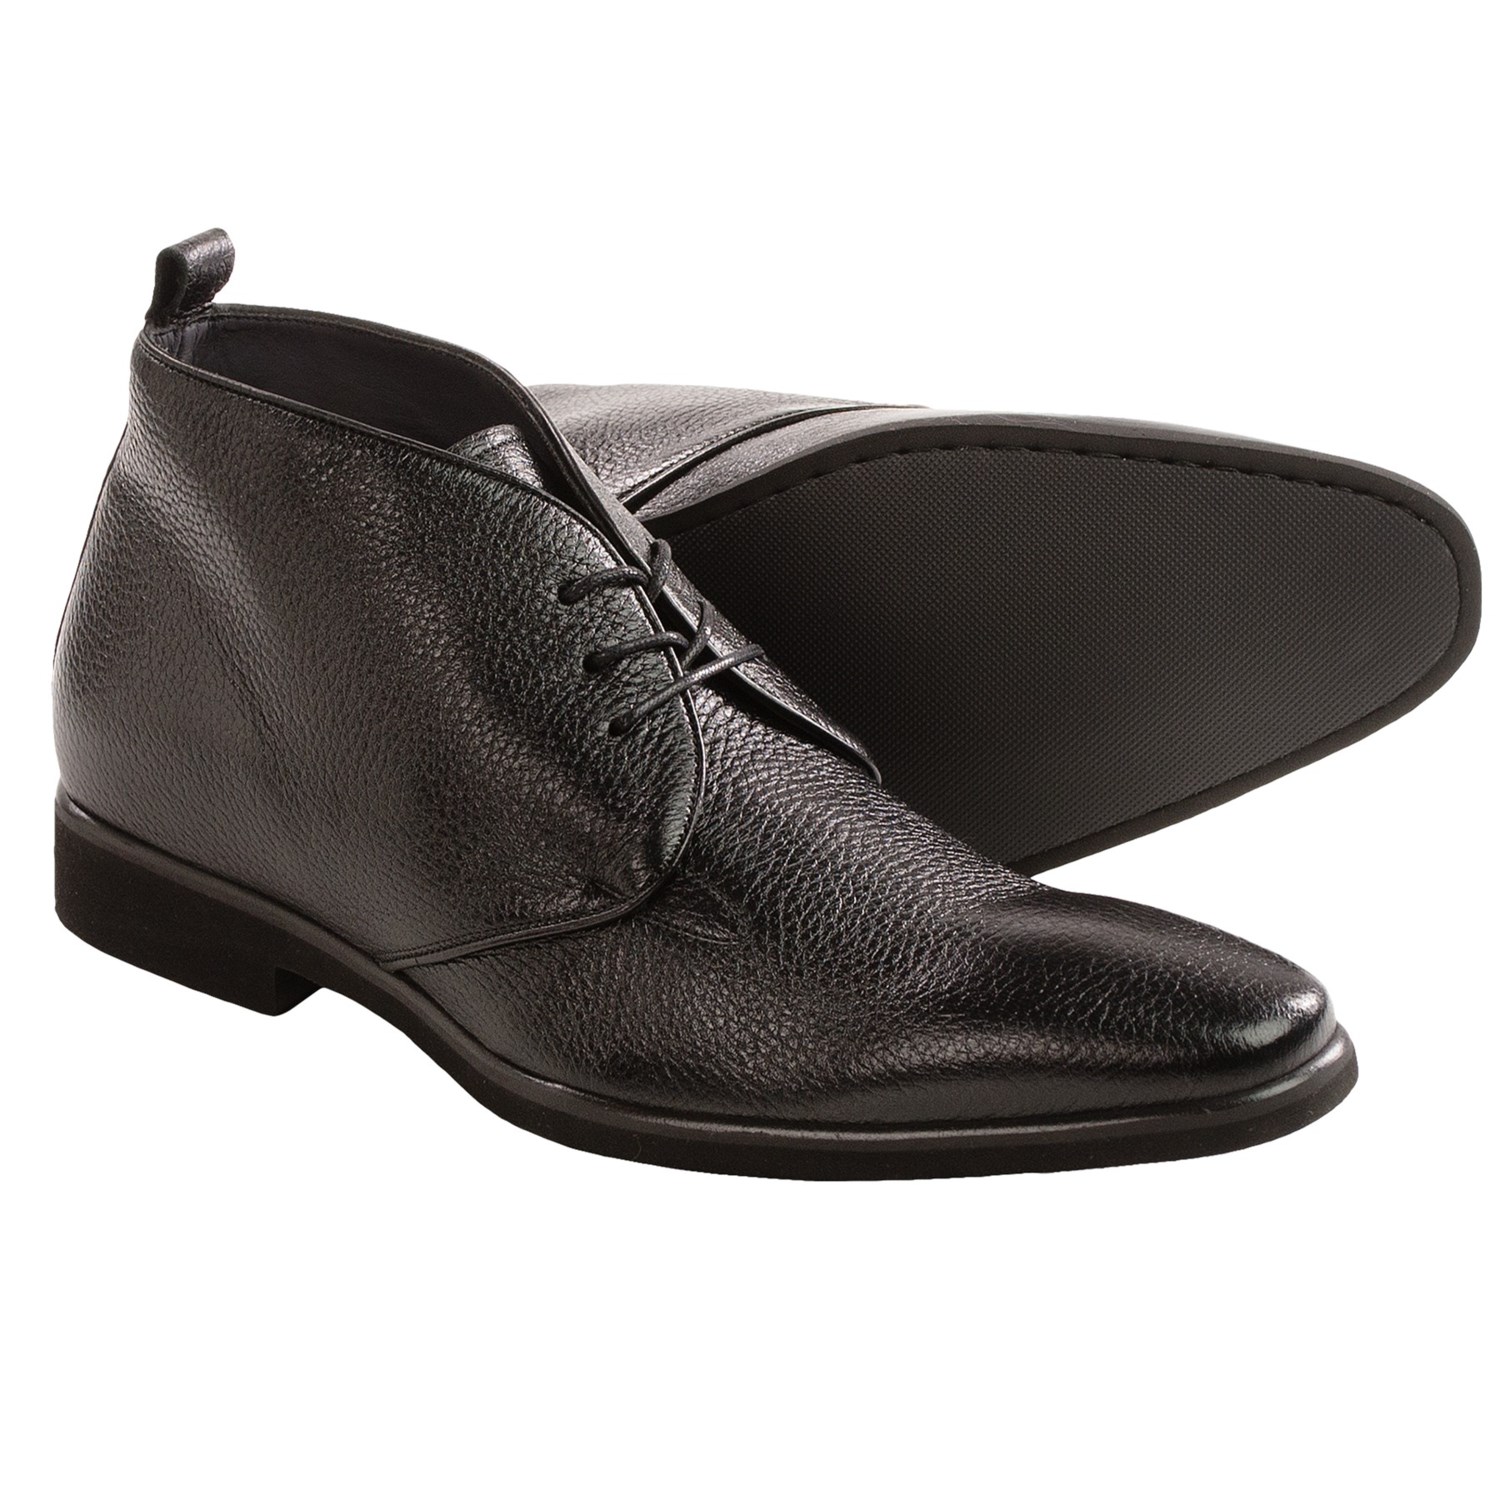 Mezlan Bellotto Deerskin Leather Chukka Boots (For Men) 9242M - Save 64%